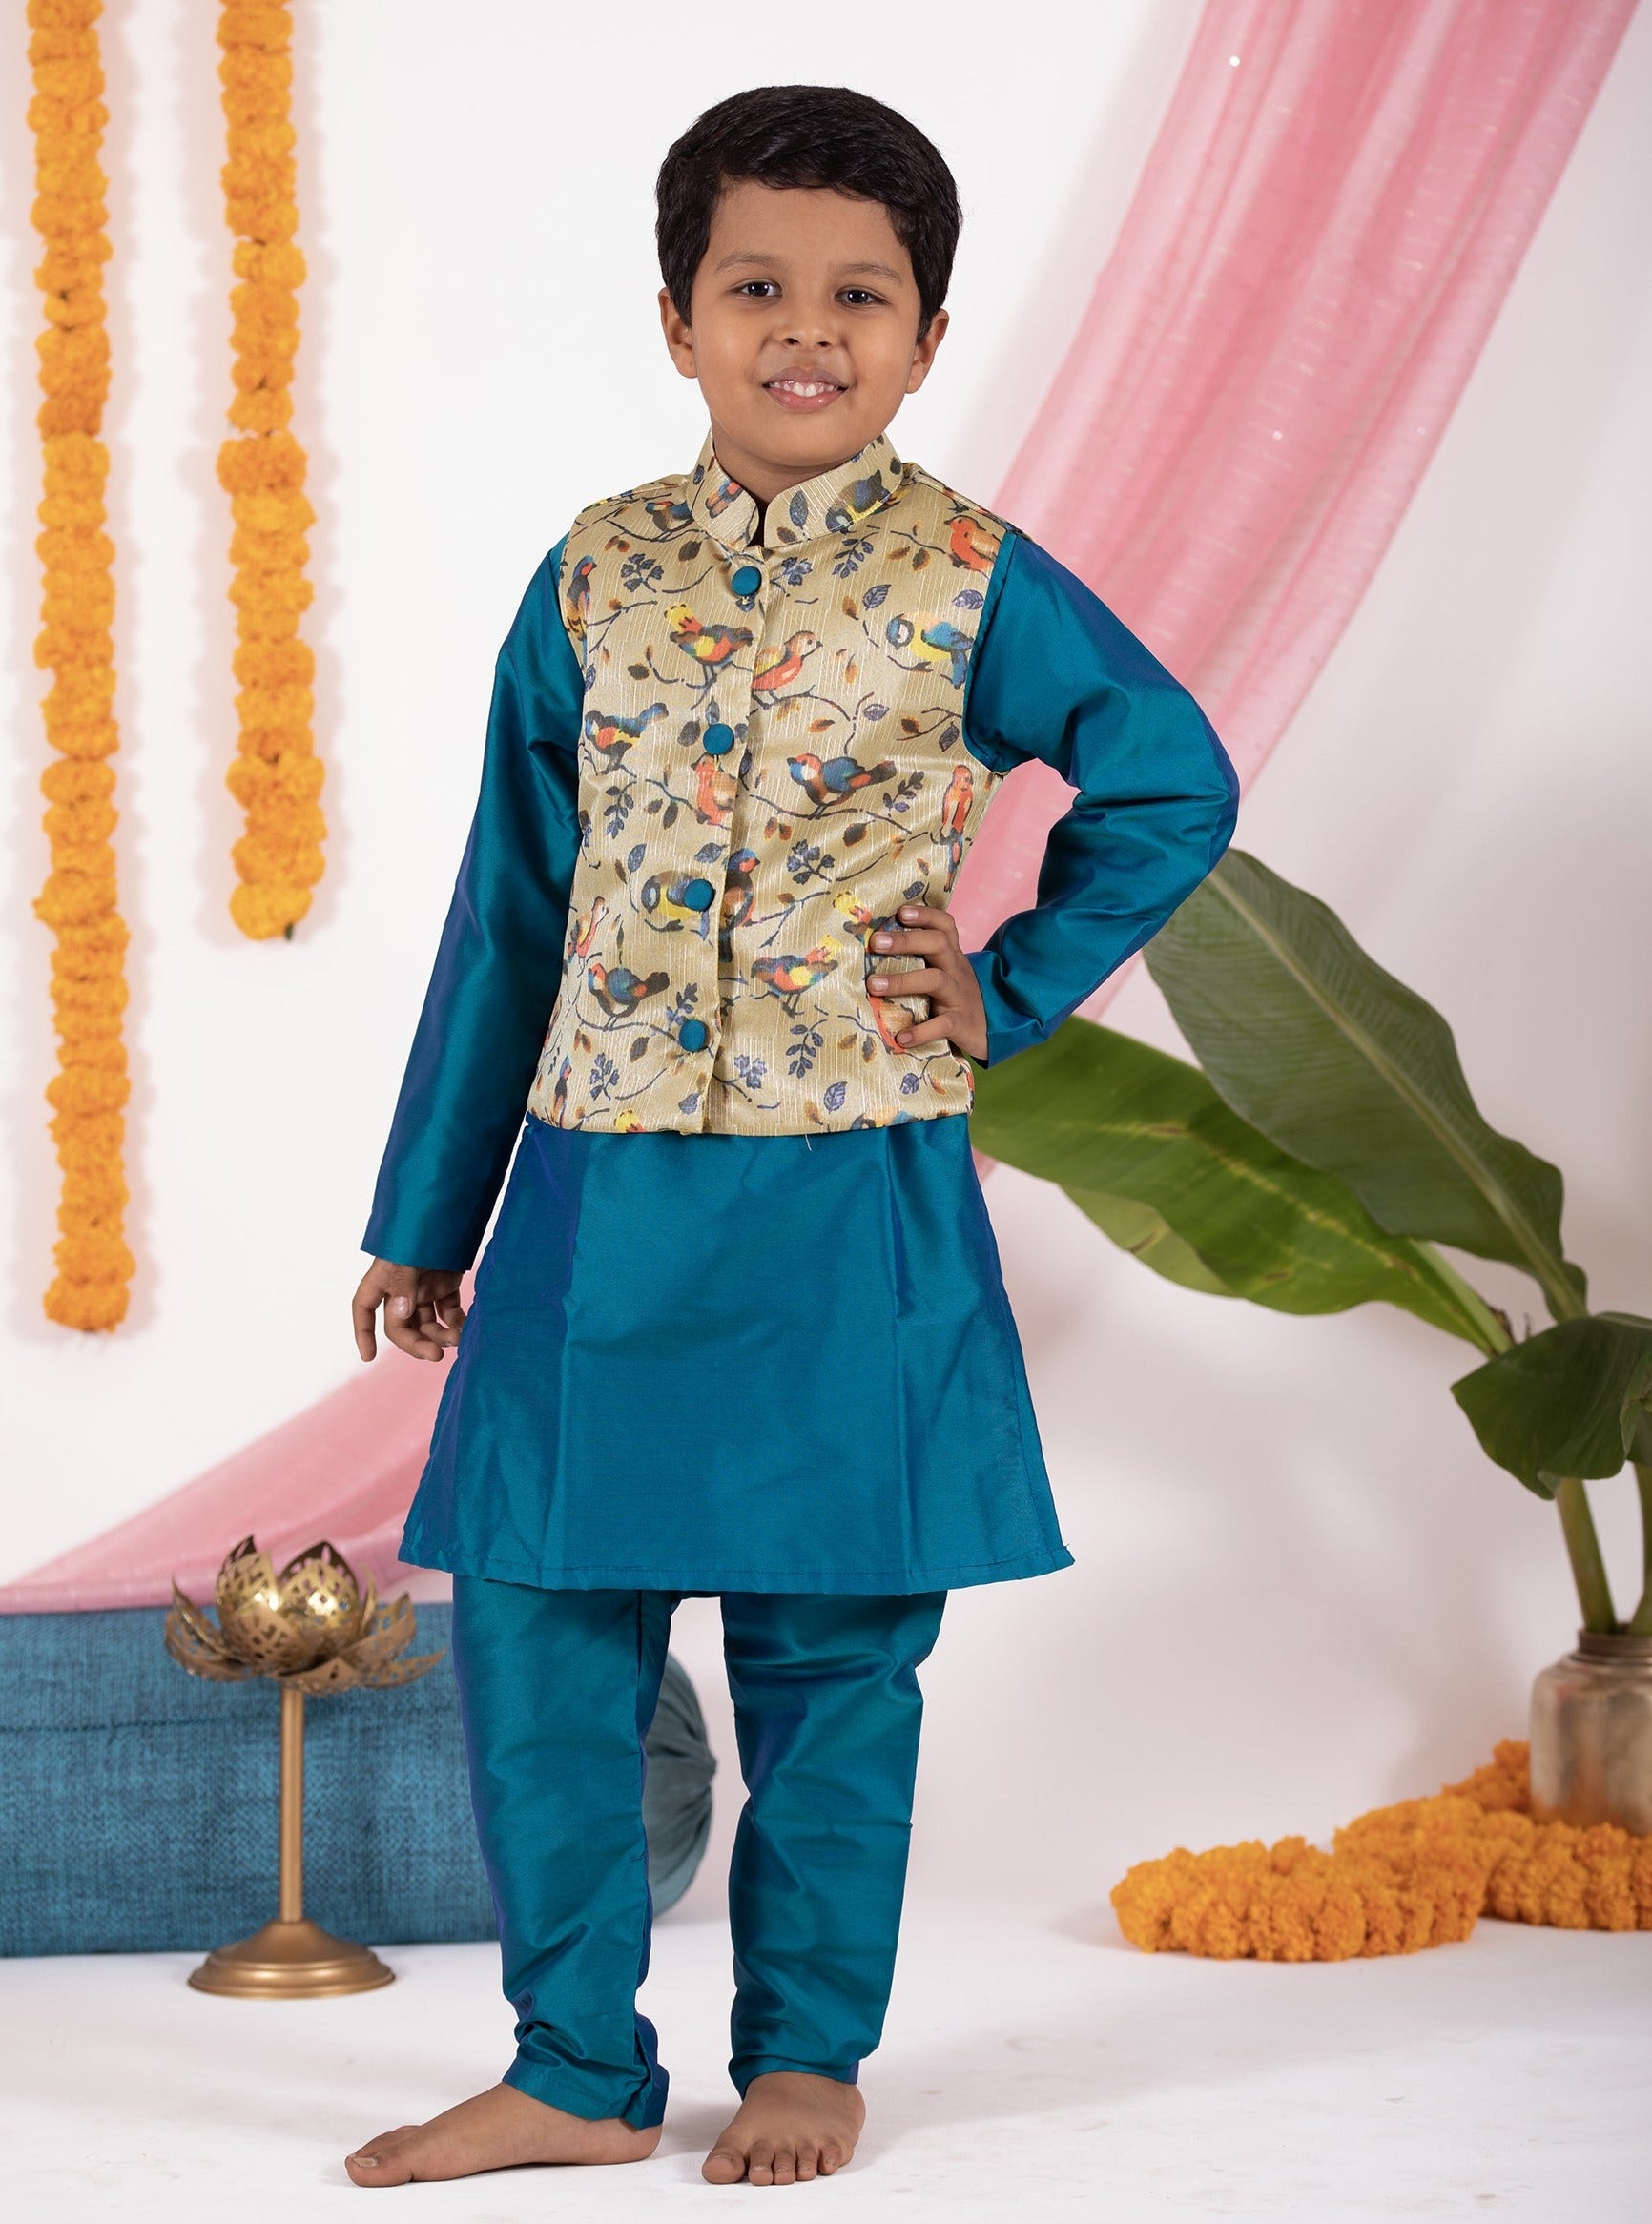 Peacock blue traditional ethnic brocade printed silk cotton kurta pyjama salwar suit pajama churidar set sherwani jacket for baby boy kids 